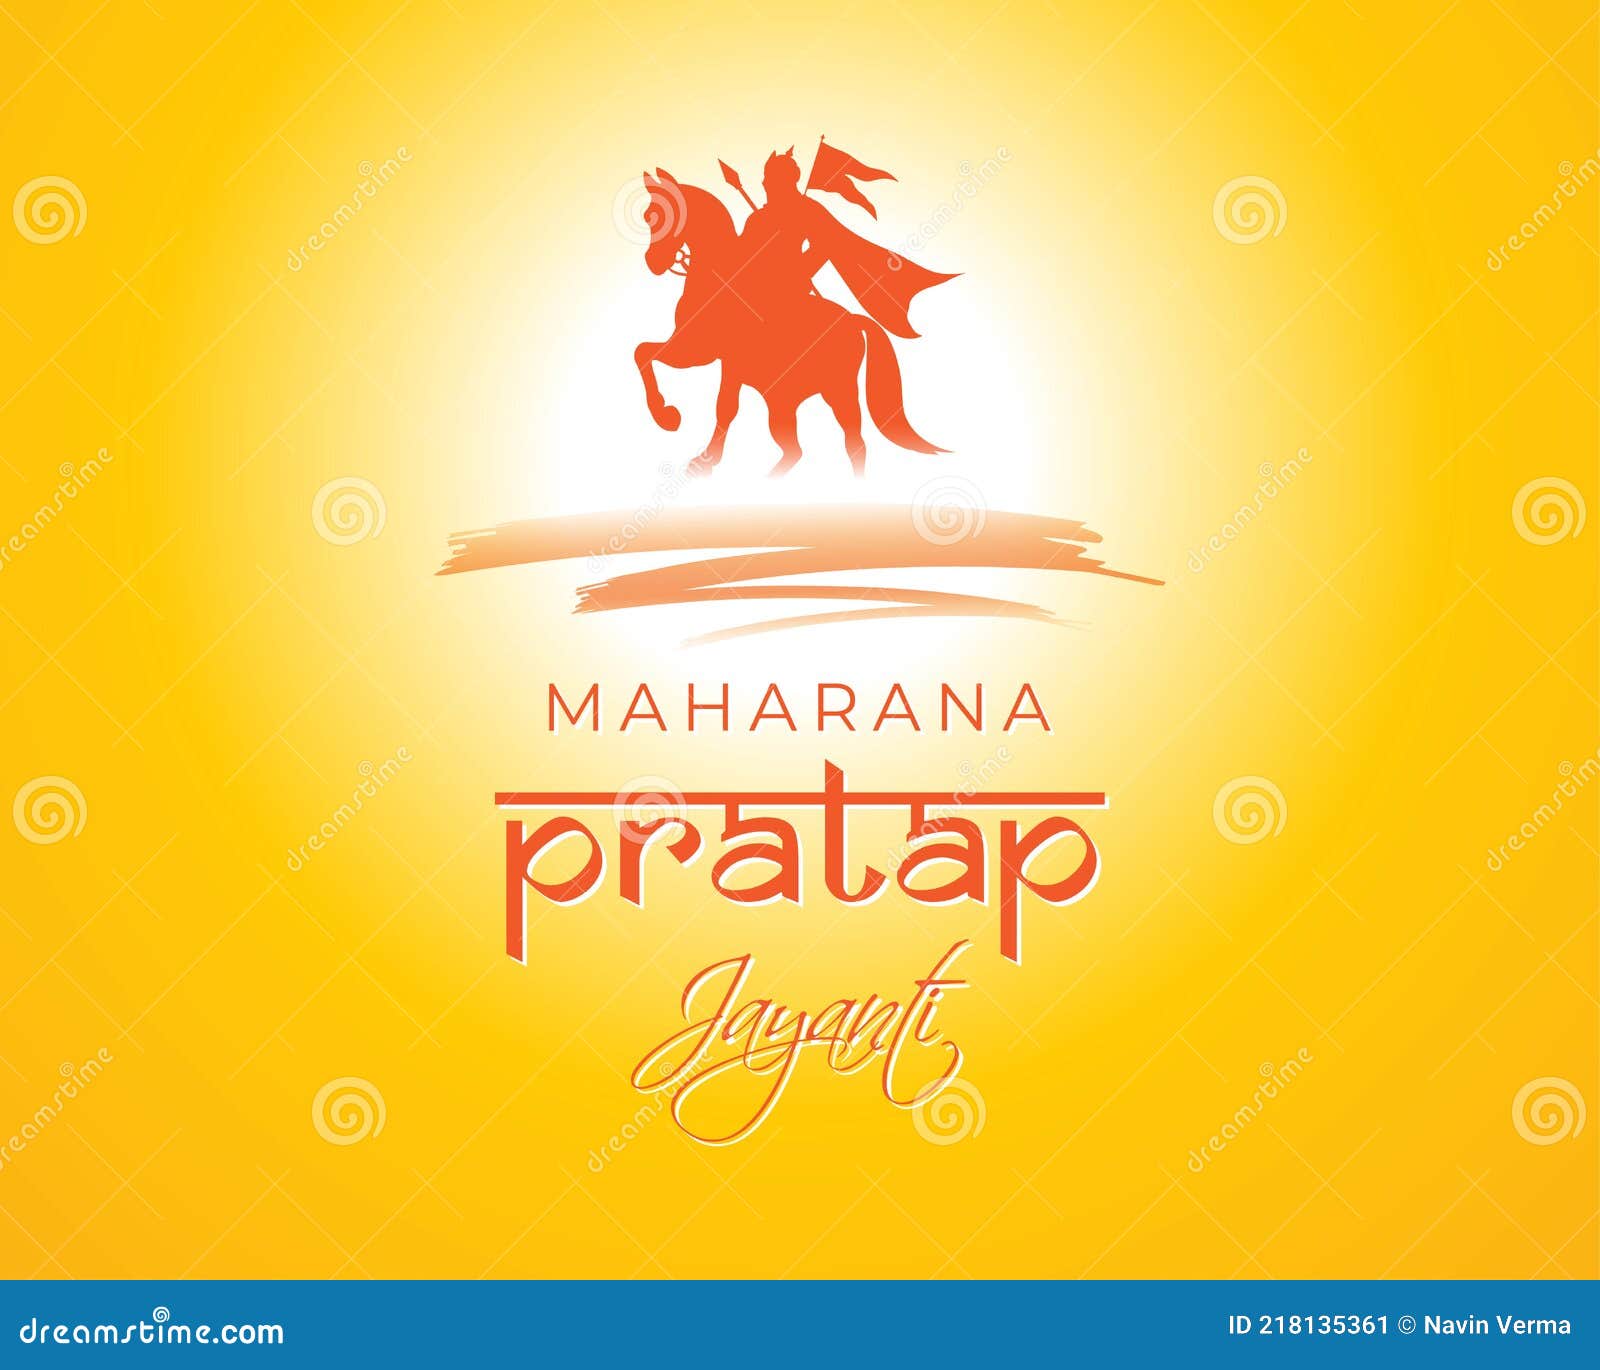 maharana-pratap-logo | PinnacleWorks